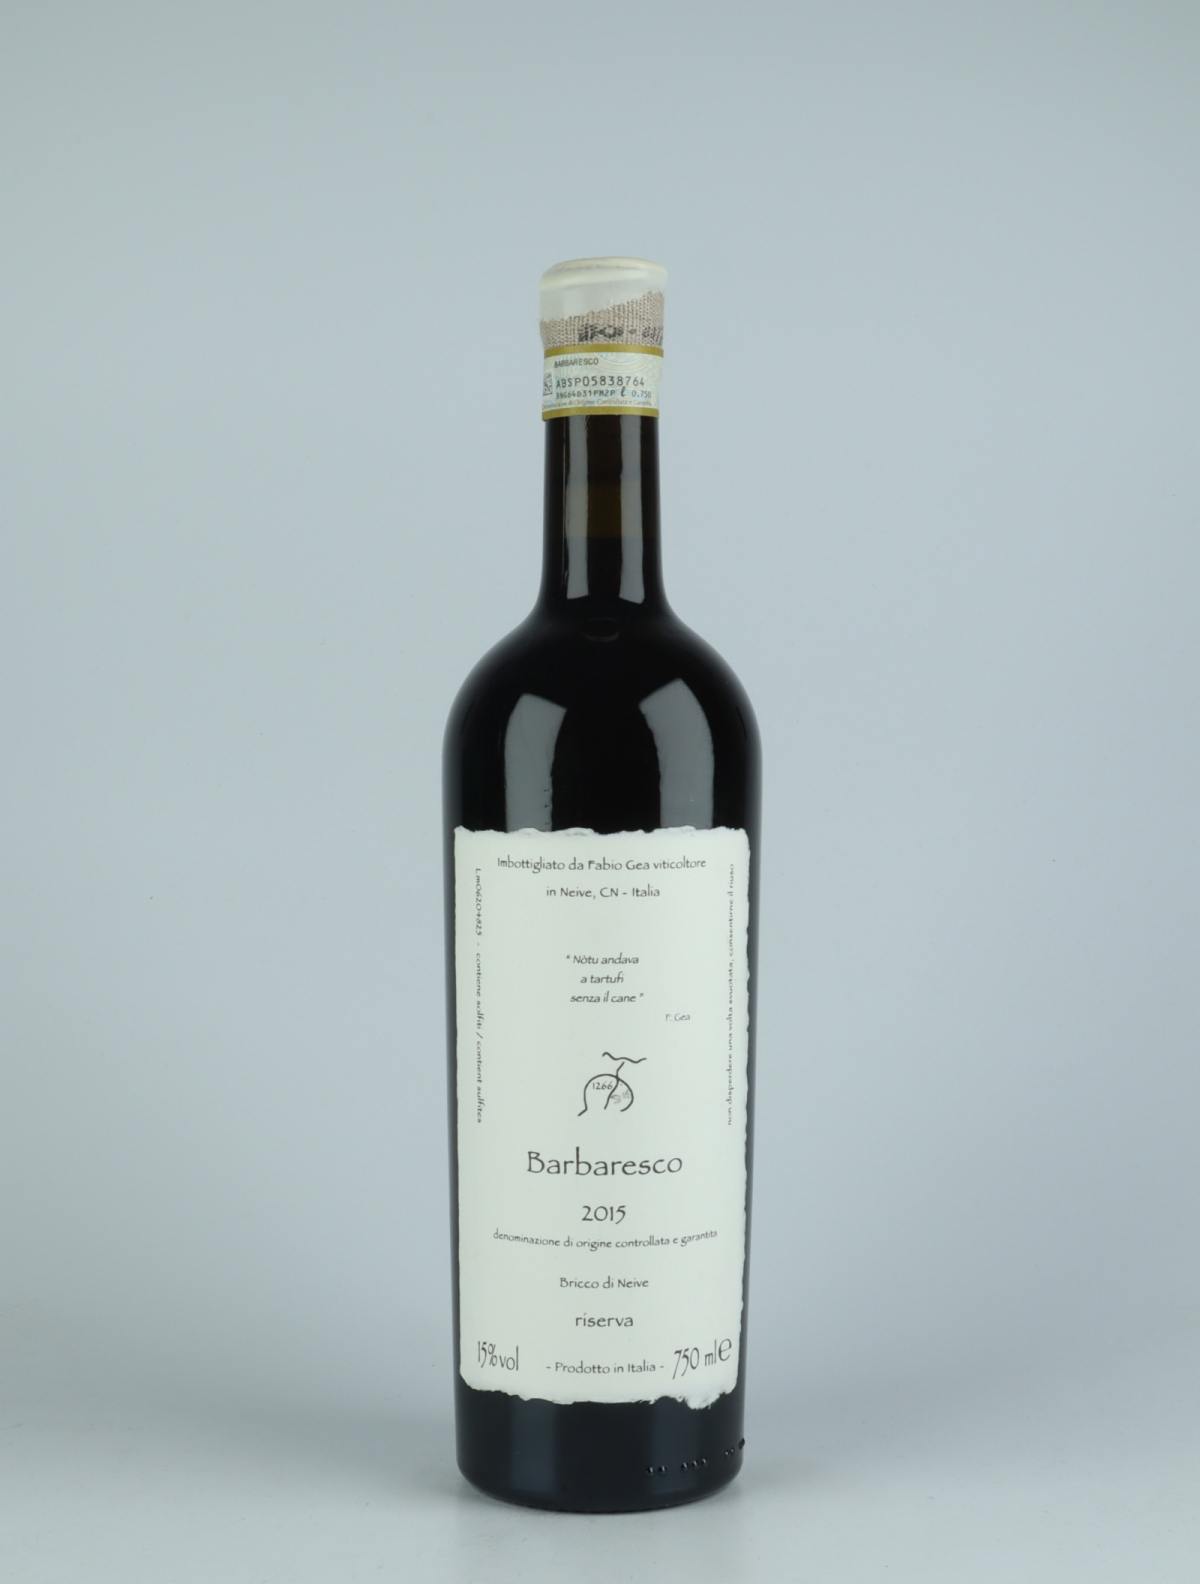 En flaske 2015 Barbaresco Riserva Rødvin fra Fabio Gea, Piemonte i Italien